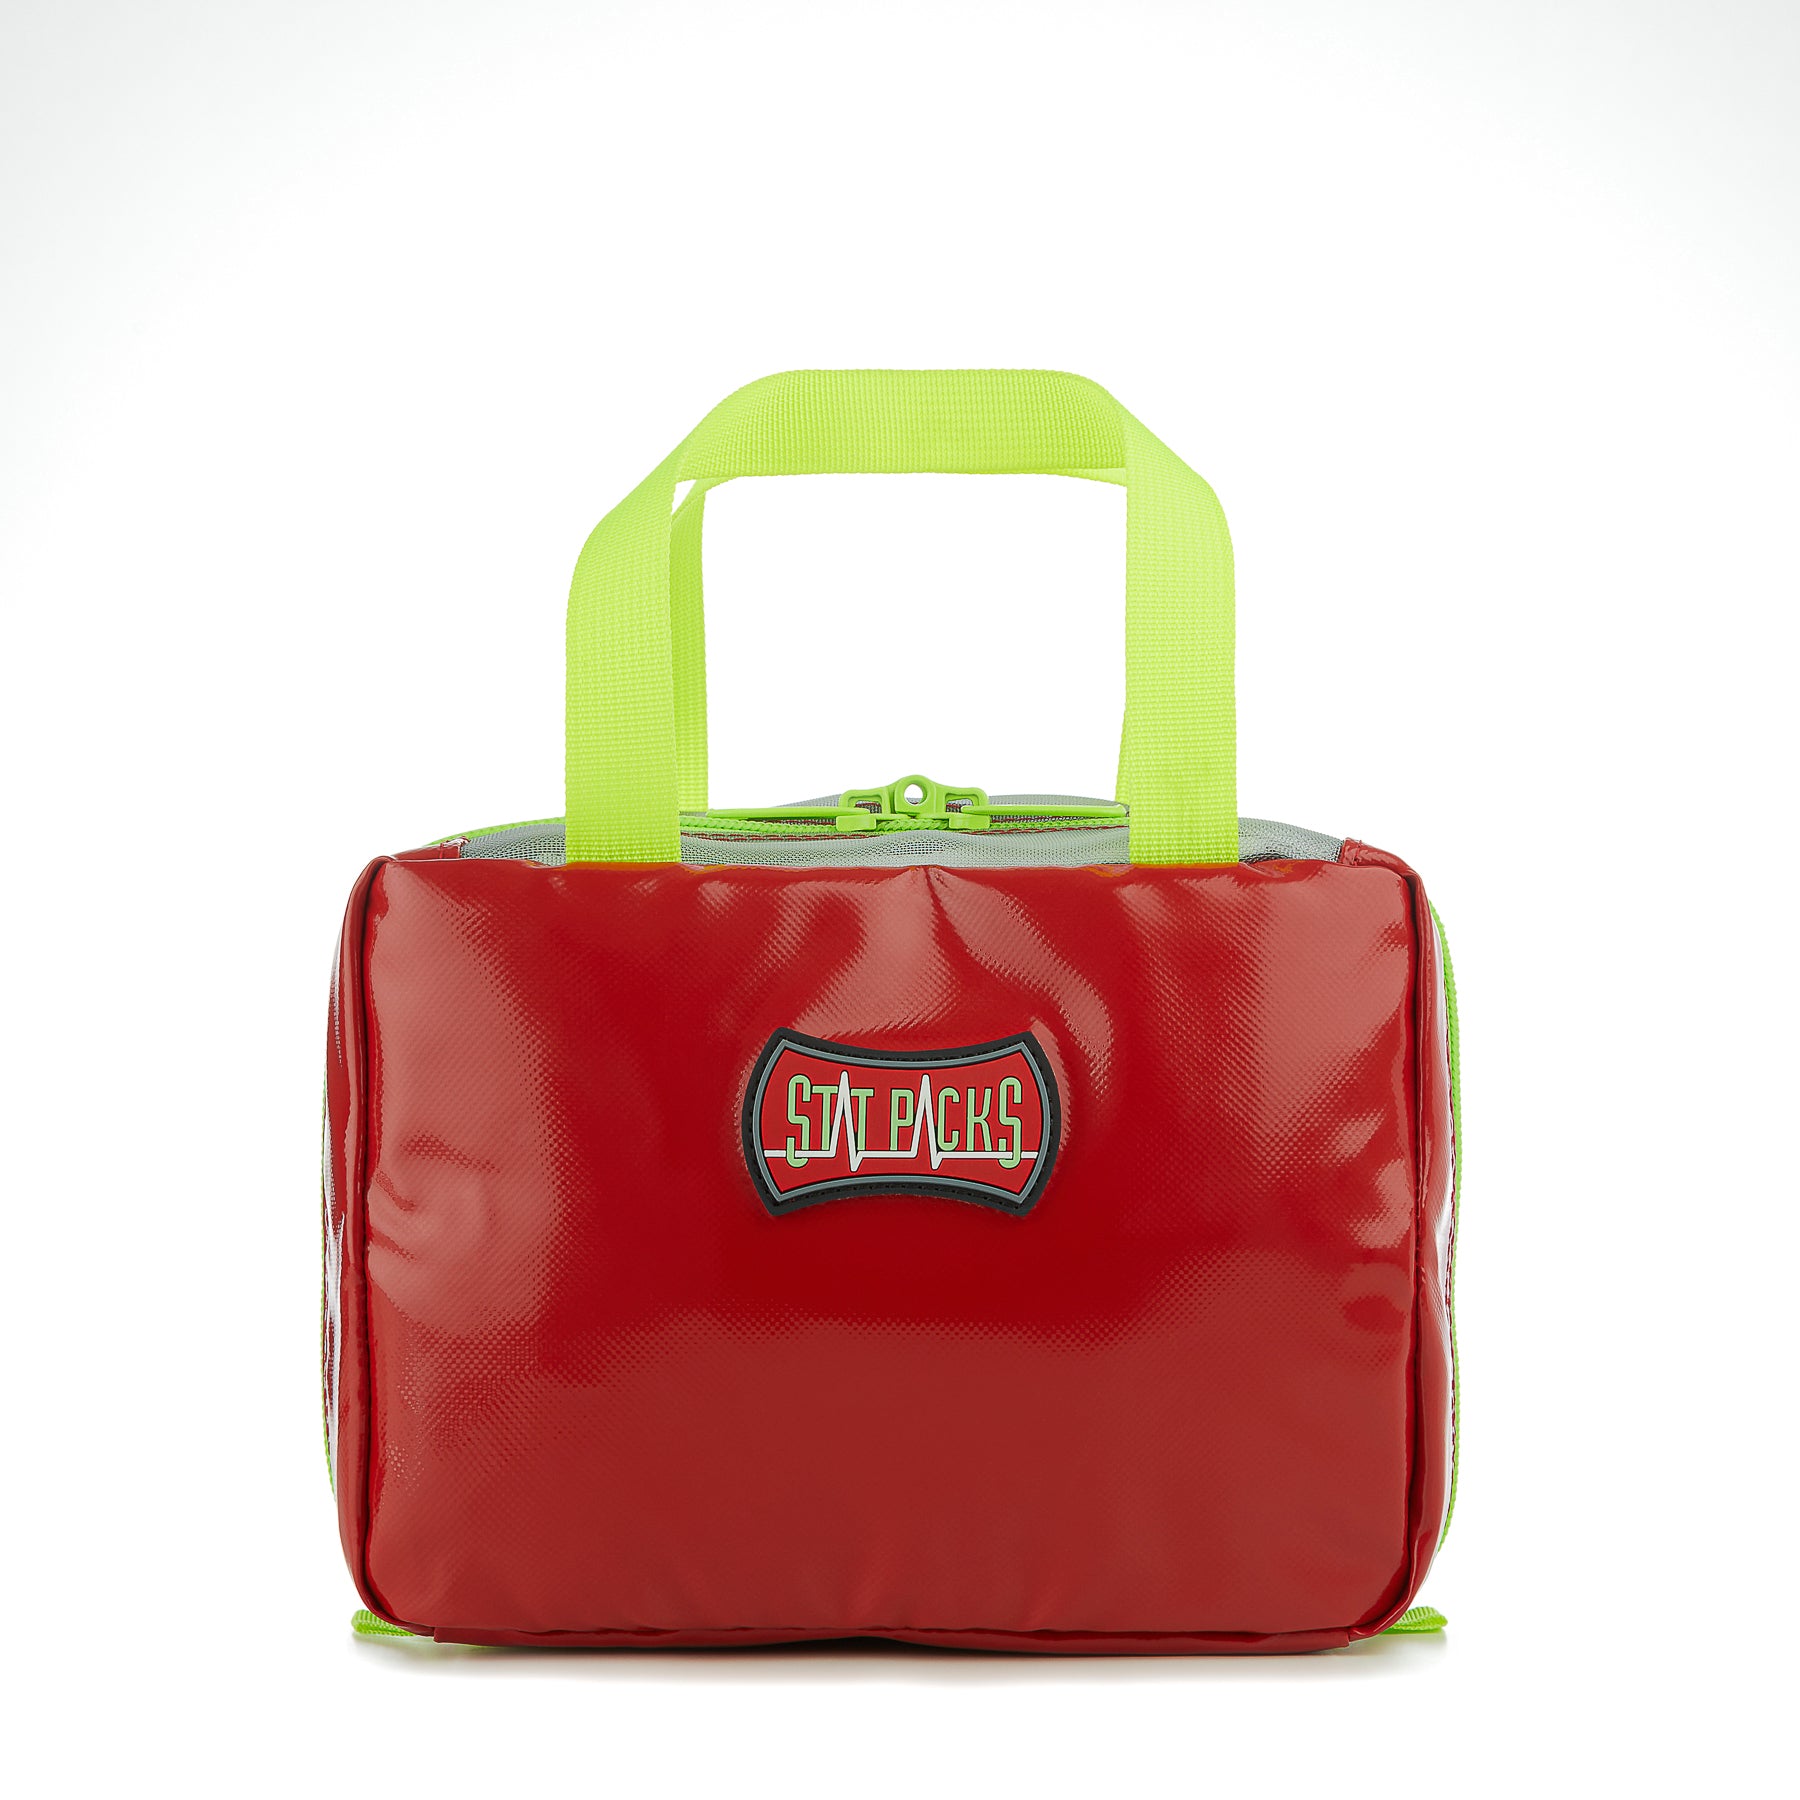 Statpacks G3+ Remedy Kit, Red